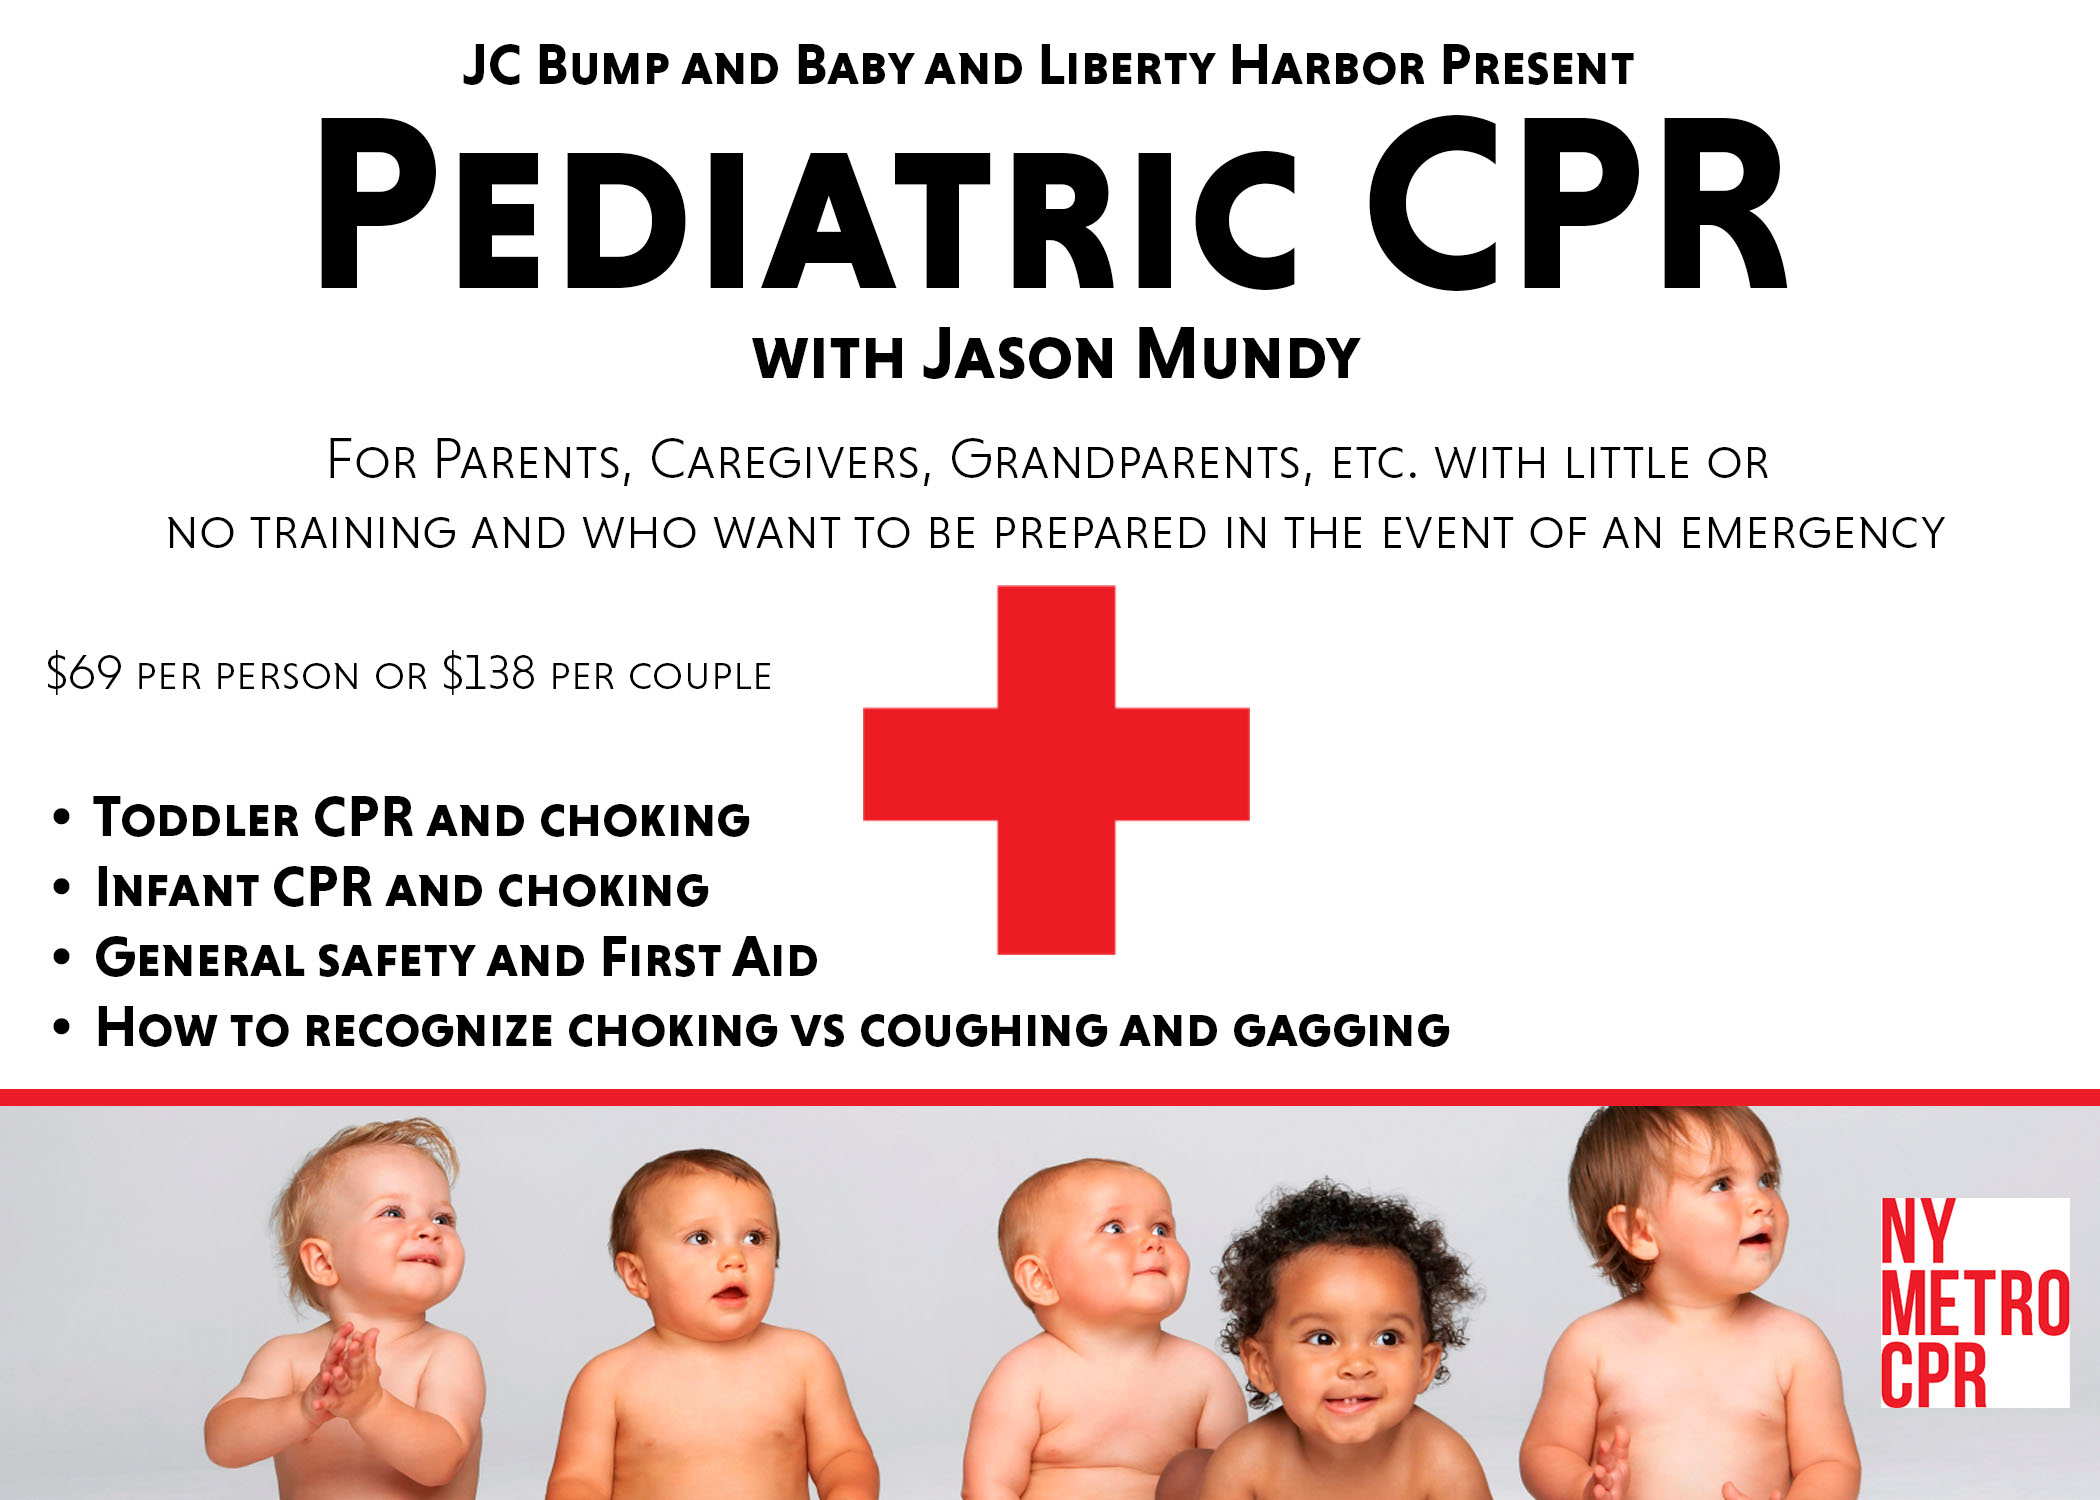 Pediatric CPR Class: Jason Mundy - Feb 17, 2019 | Liberty ...